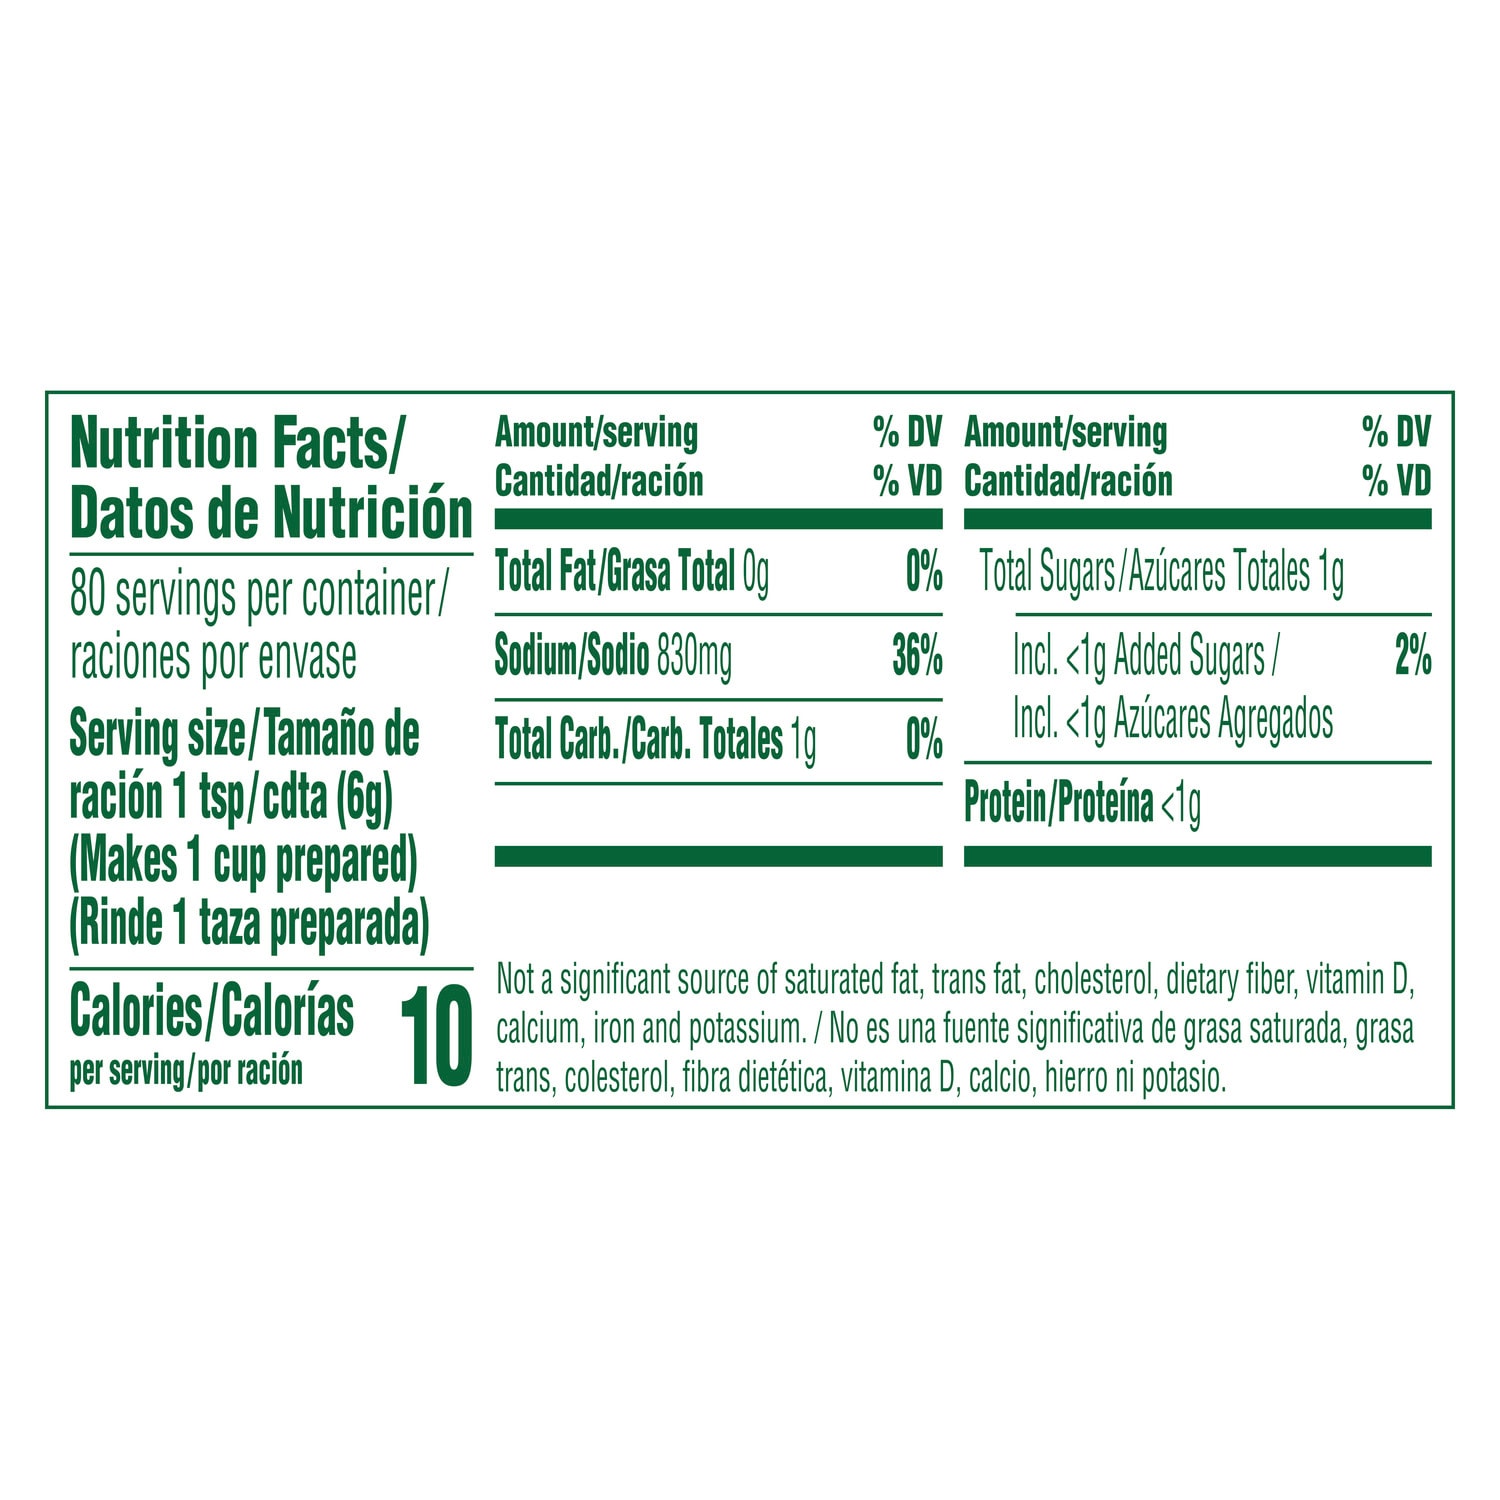 Knorr® Professional Ultimate Ham Paste Bouillon1 lb. 6 pack - 